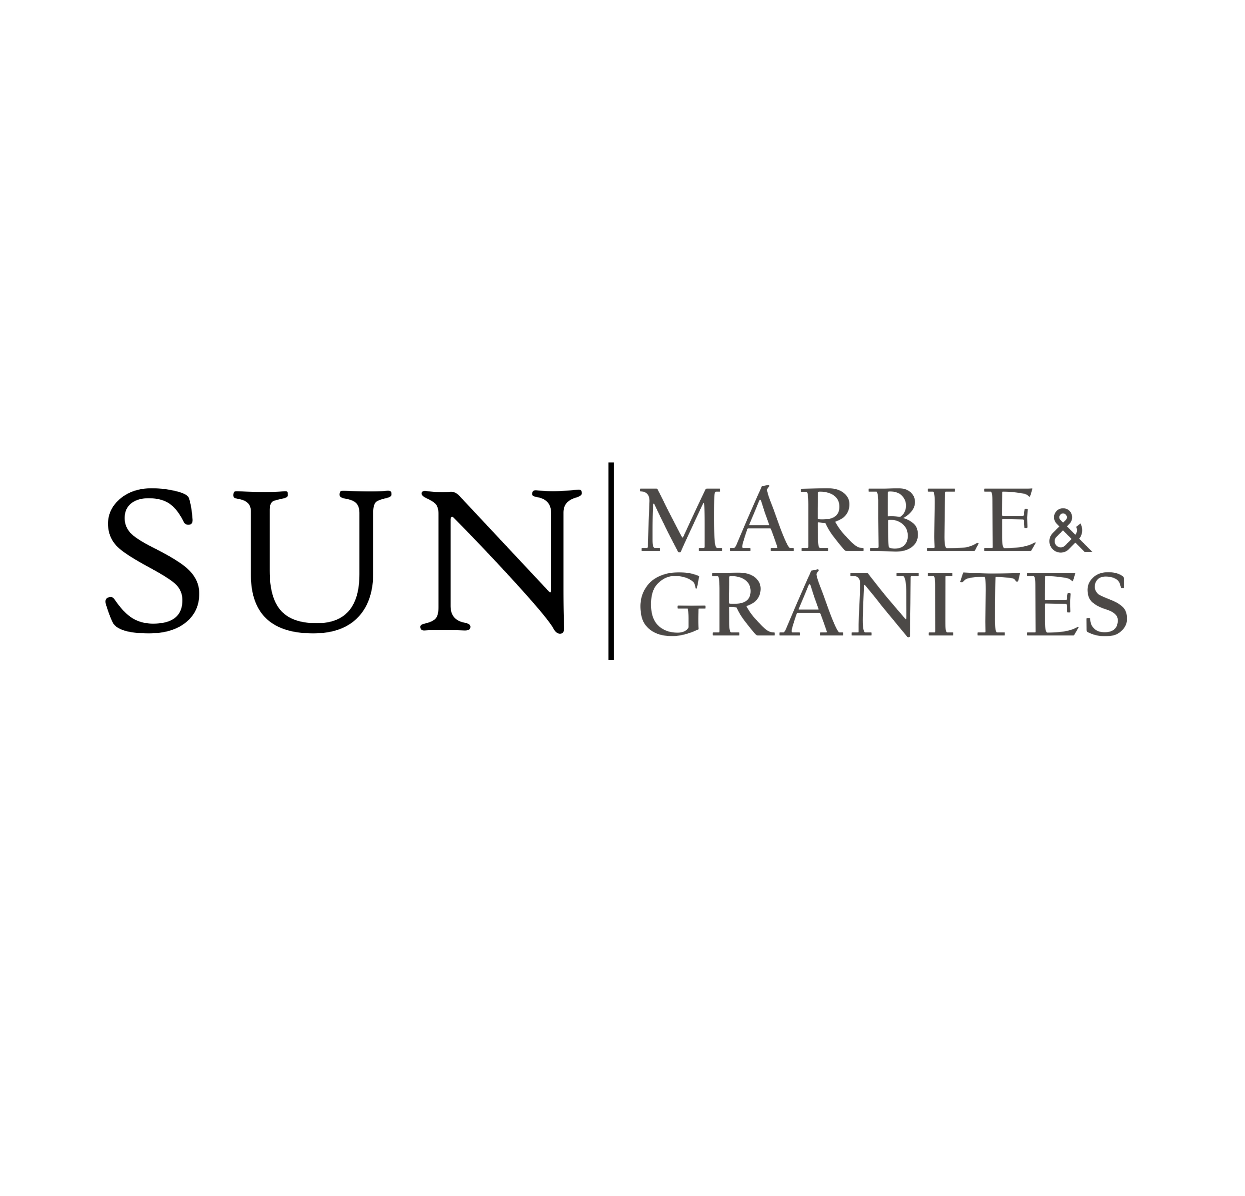 Sun Marble & Granites